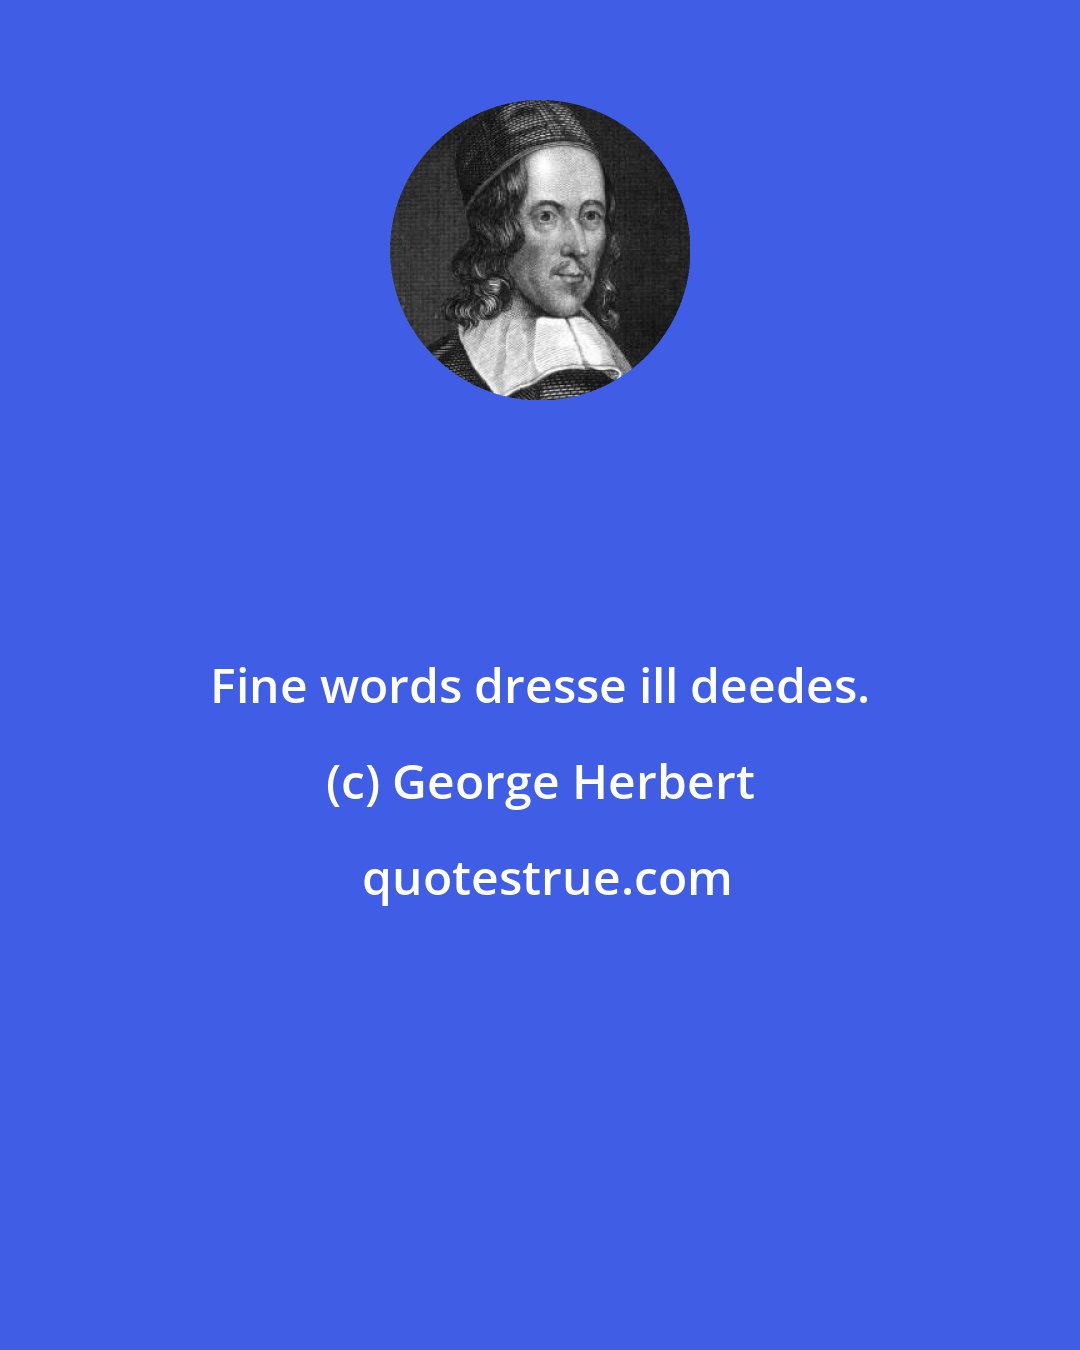 George Herbert: Fine words dresse ill deedes.